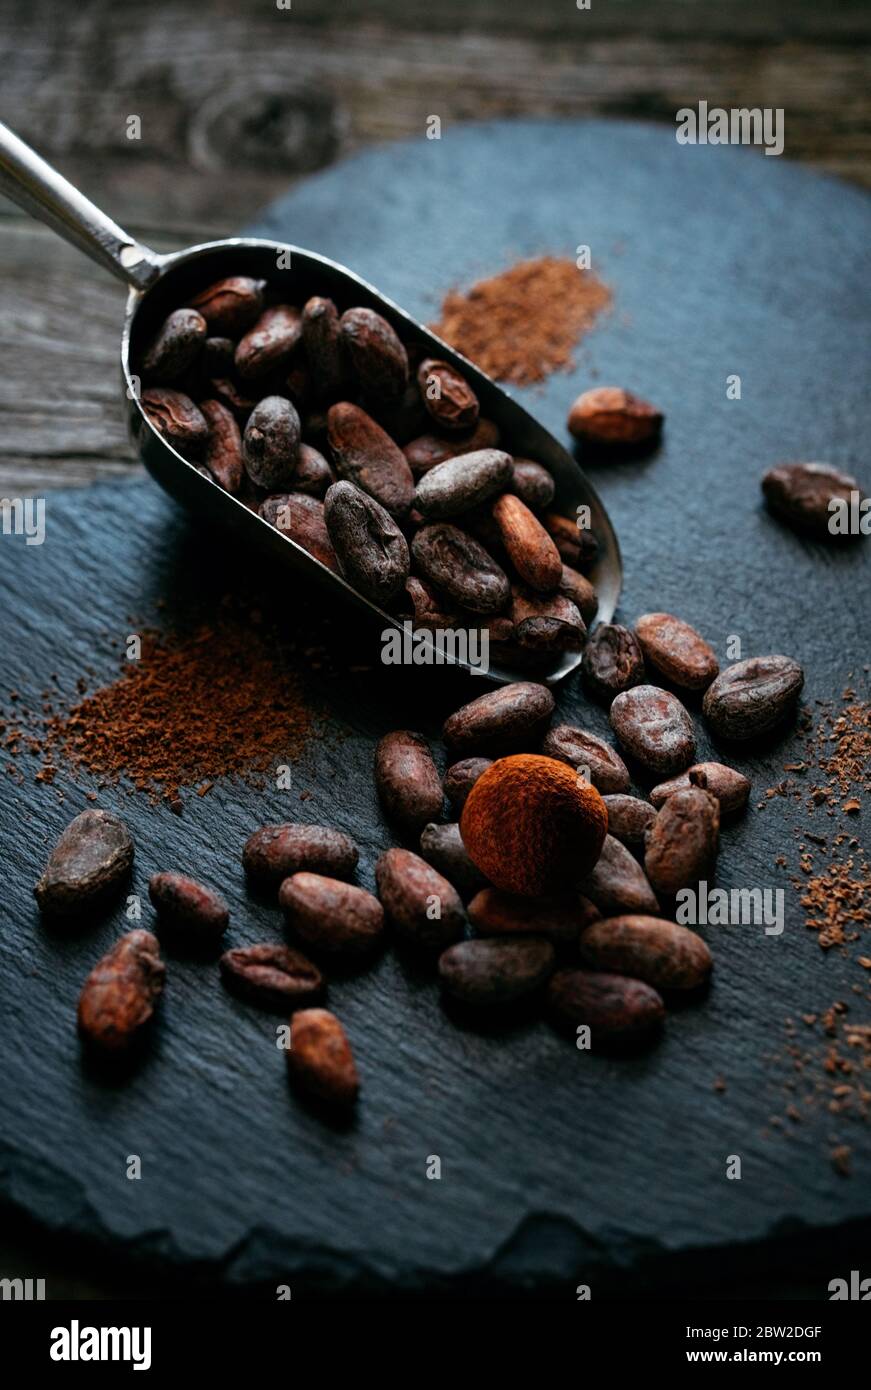 https://c8.alamy.com/comp/2BW2DGF/chocolate-truffle-beside-bulk-measuring-scoop-with-cocoa-beans-on-black-stone-stand-homemade-fresh-truffle-dark-chocolate-candies-with-cocoa-powder-2BW2DGF.jpg